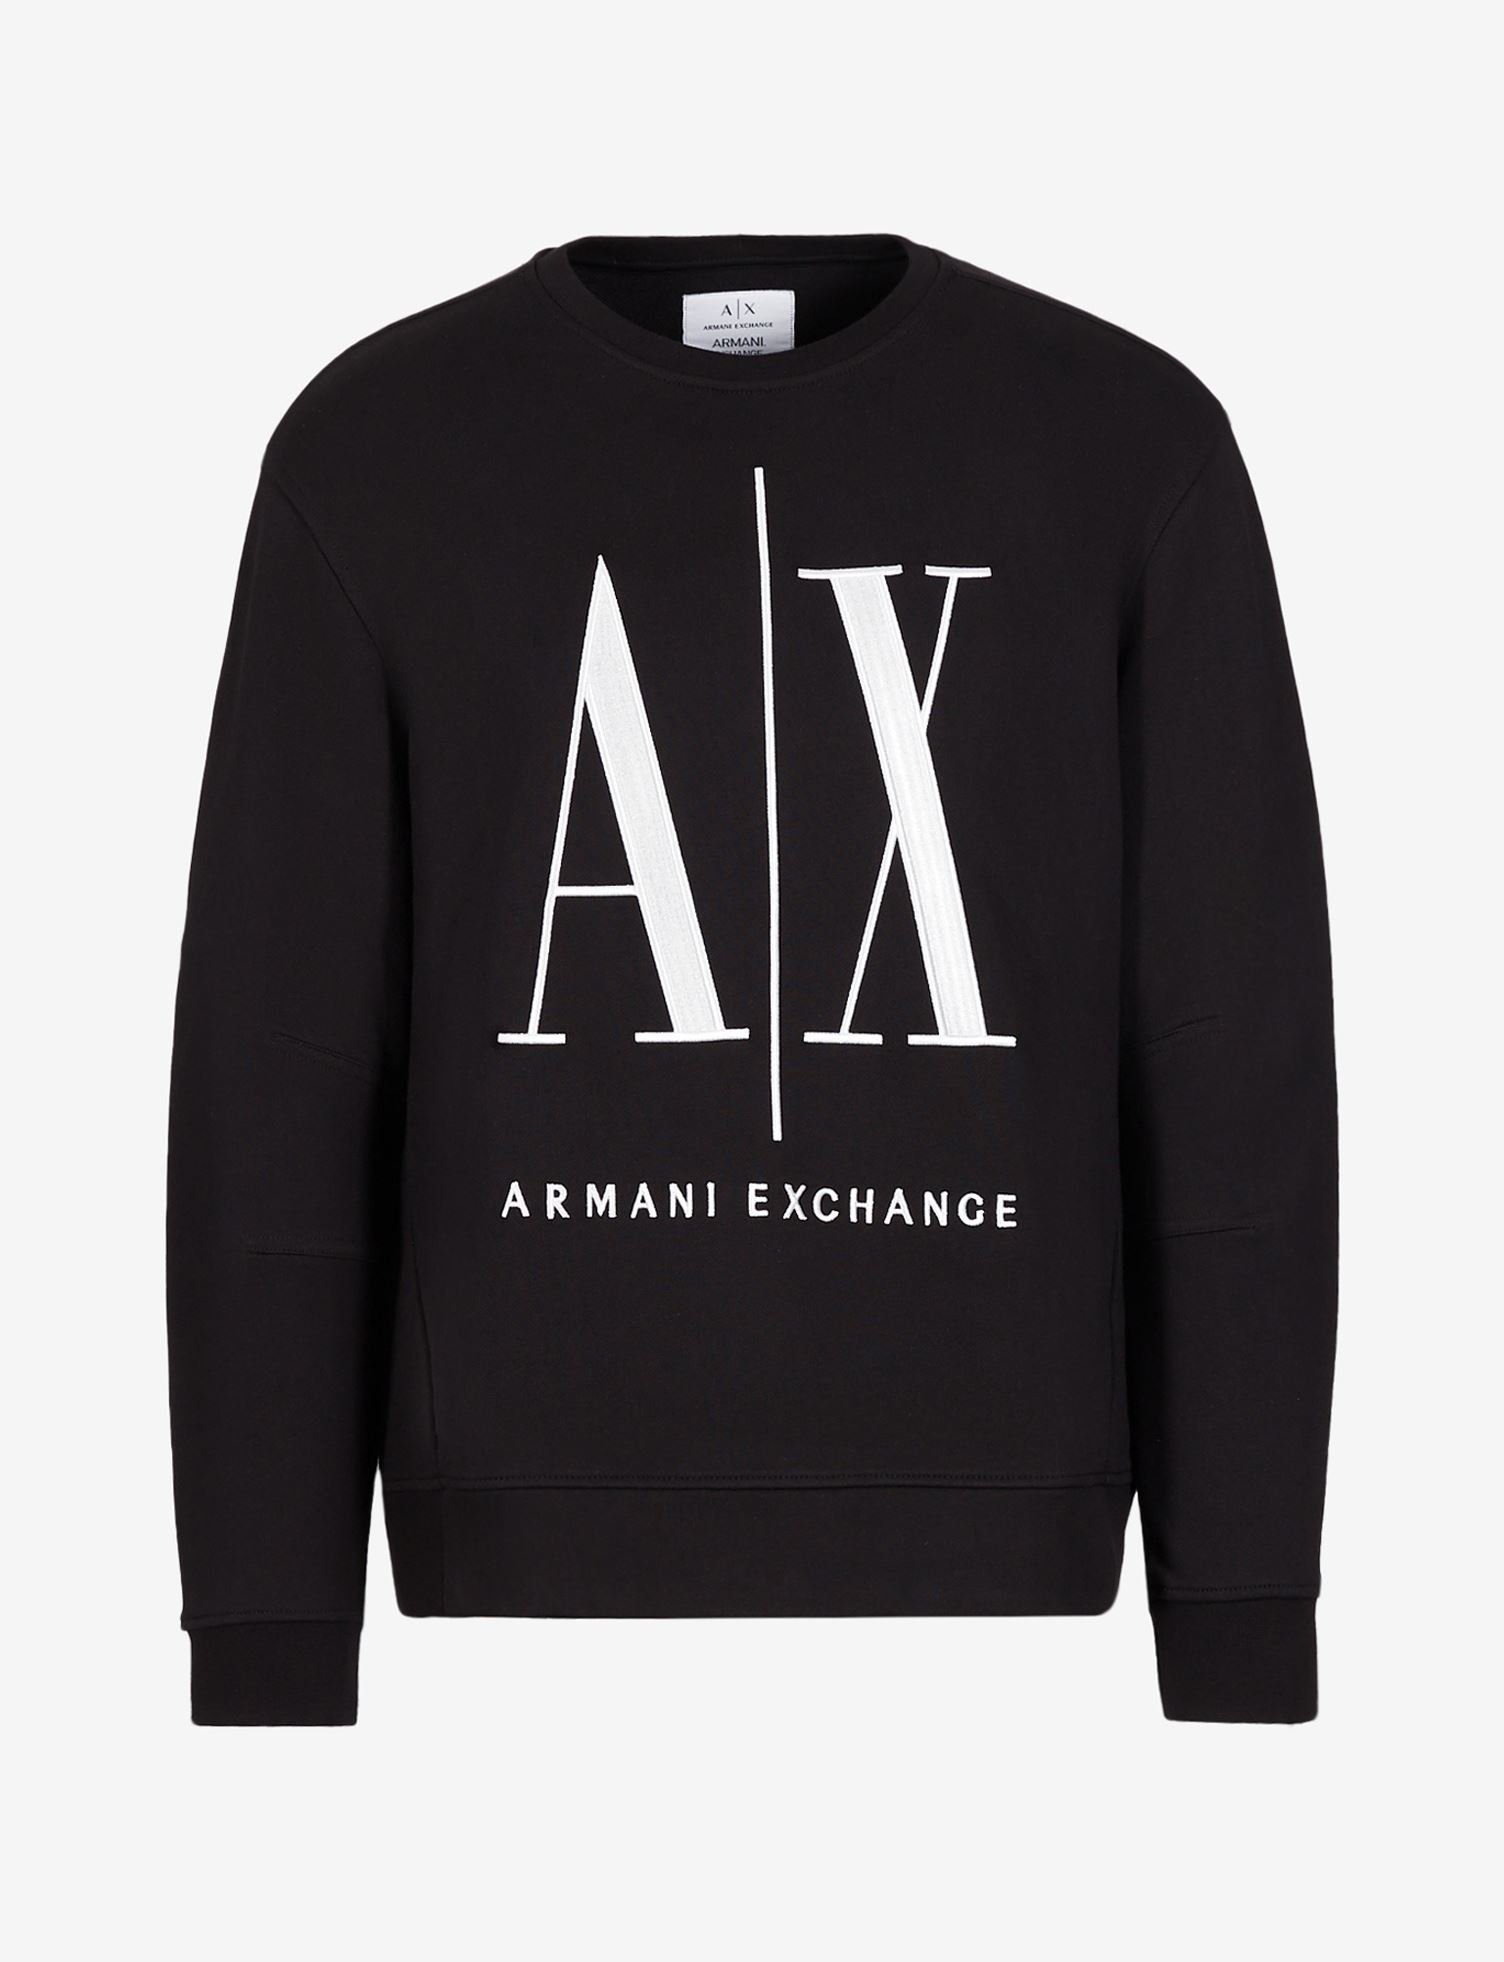 Armani Exchange_Icon Logo Sweatshirt_Original Price 7950_2nd item purchased 6360.jpeg